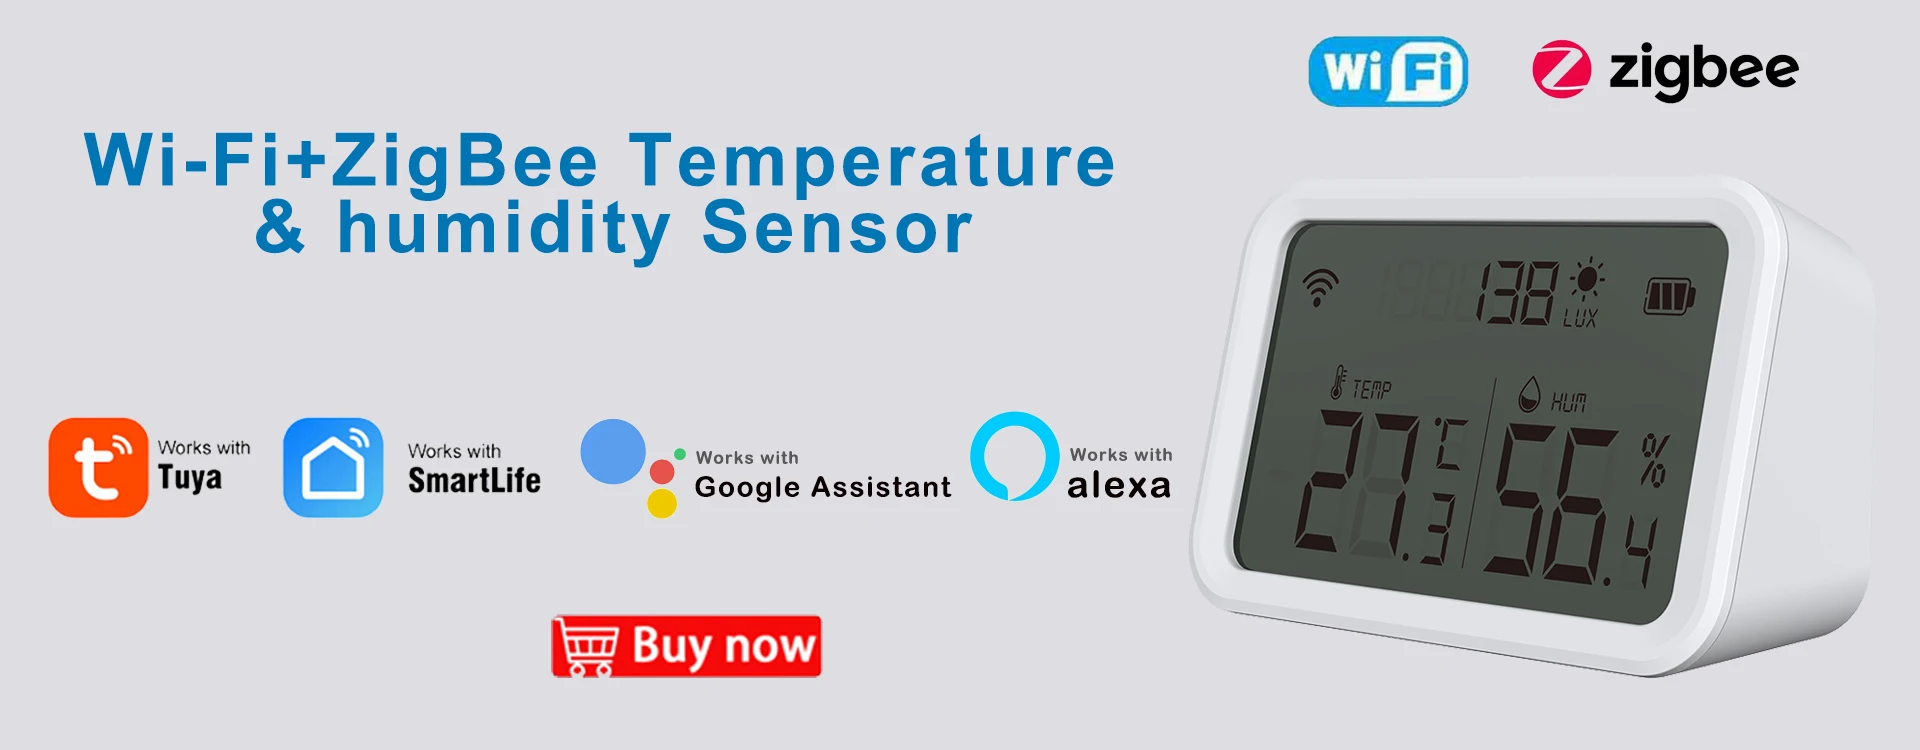 HNQH Wireless Thermometer Hygrometer,Indoor Smart Temperature & Humidity Sensor Bluetooth App Monitor Temp Humidity Tuya/Smart Life Zigbee Smart Home Security Intelligent Control via Zigbee HUB